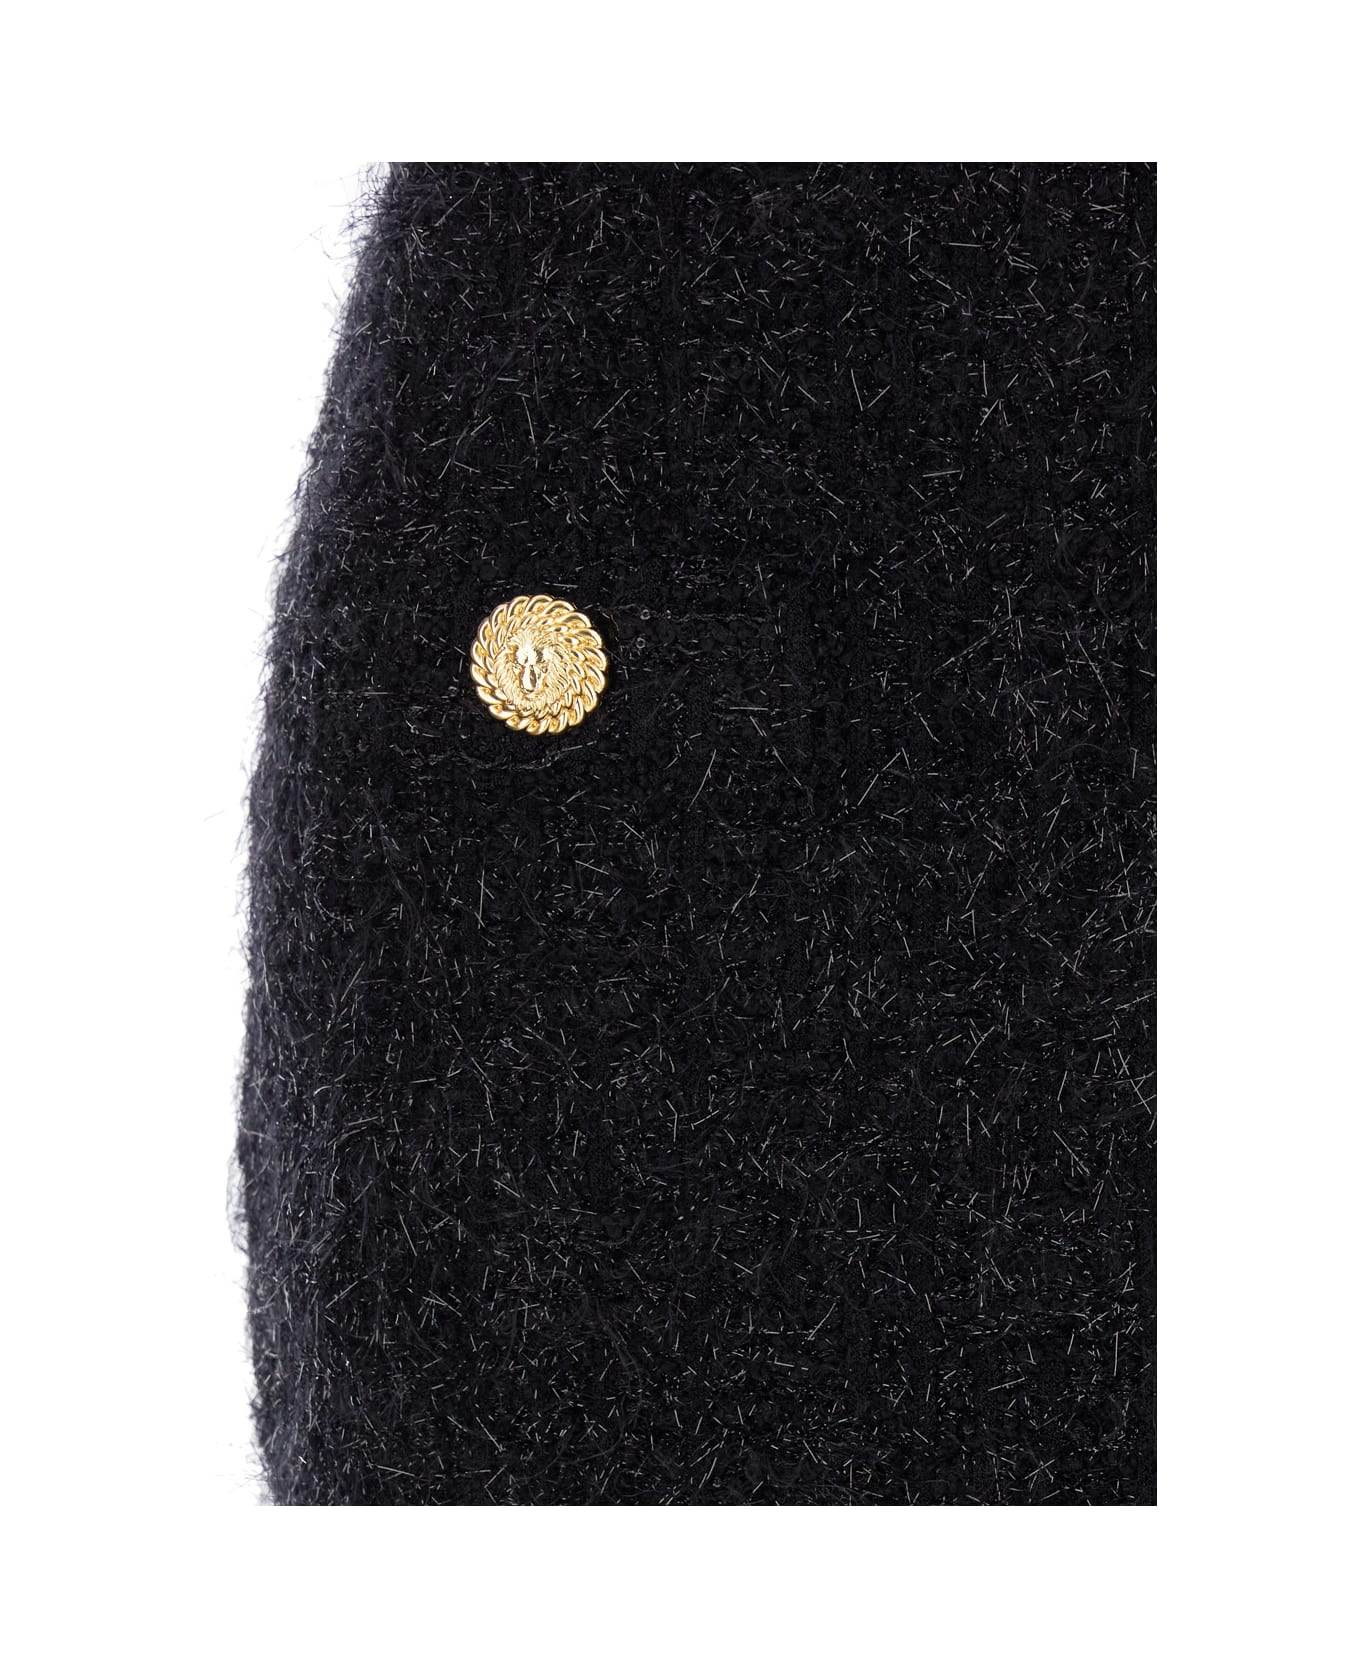 Balmain Black Pencil Mini Skirt With Jewel Buttons In Tweed Woman - Black